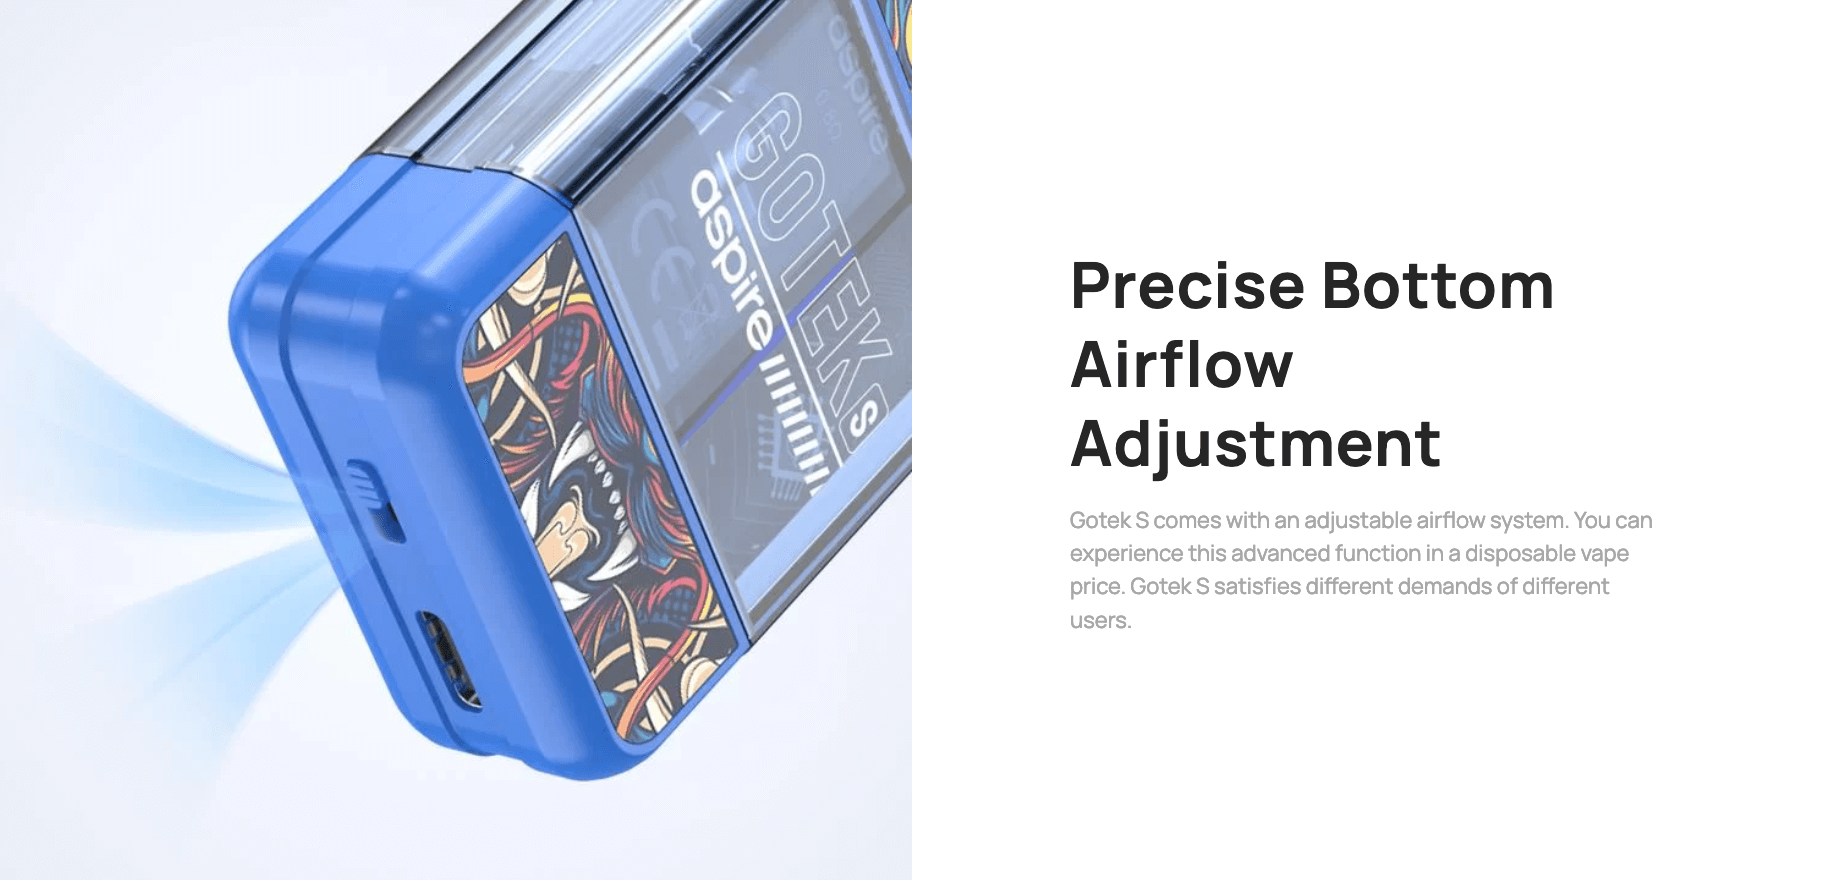 Gotek S - precise bottom airflow adjustment